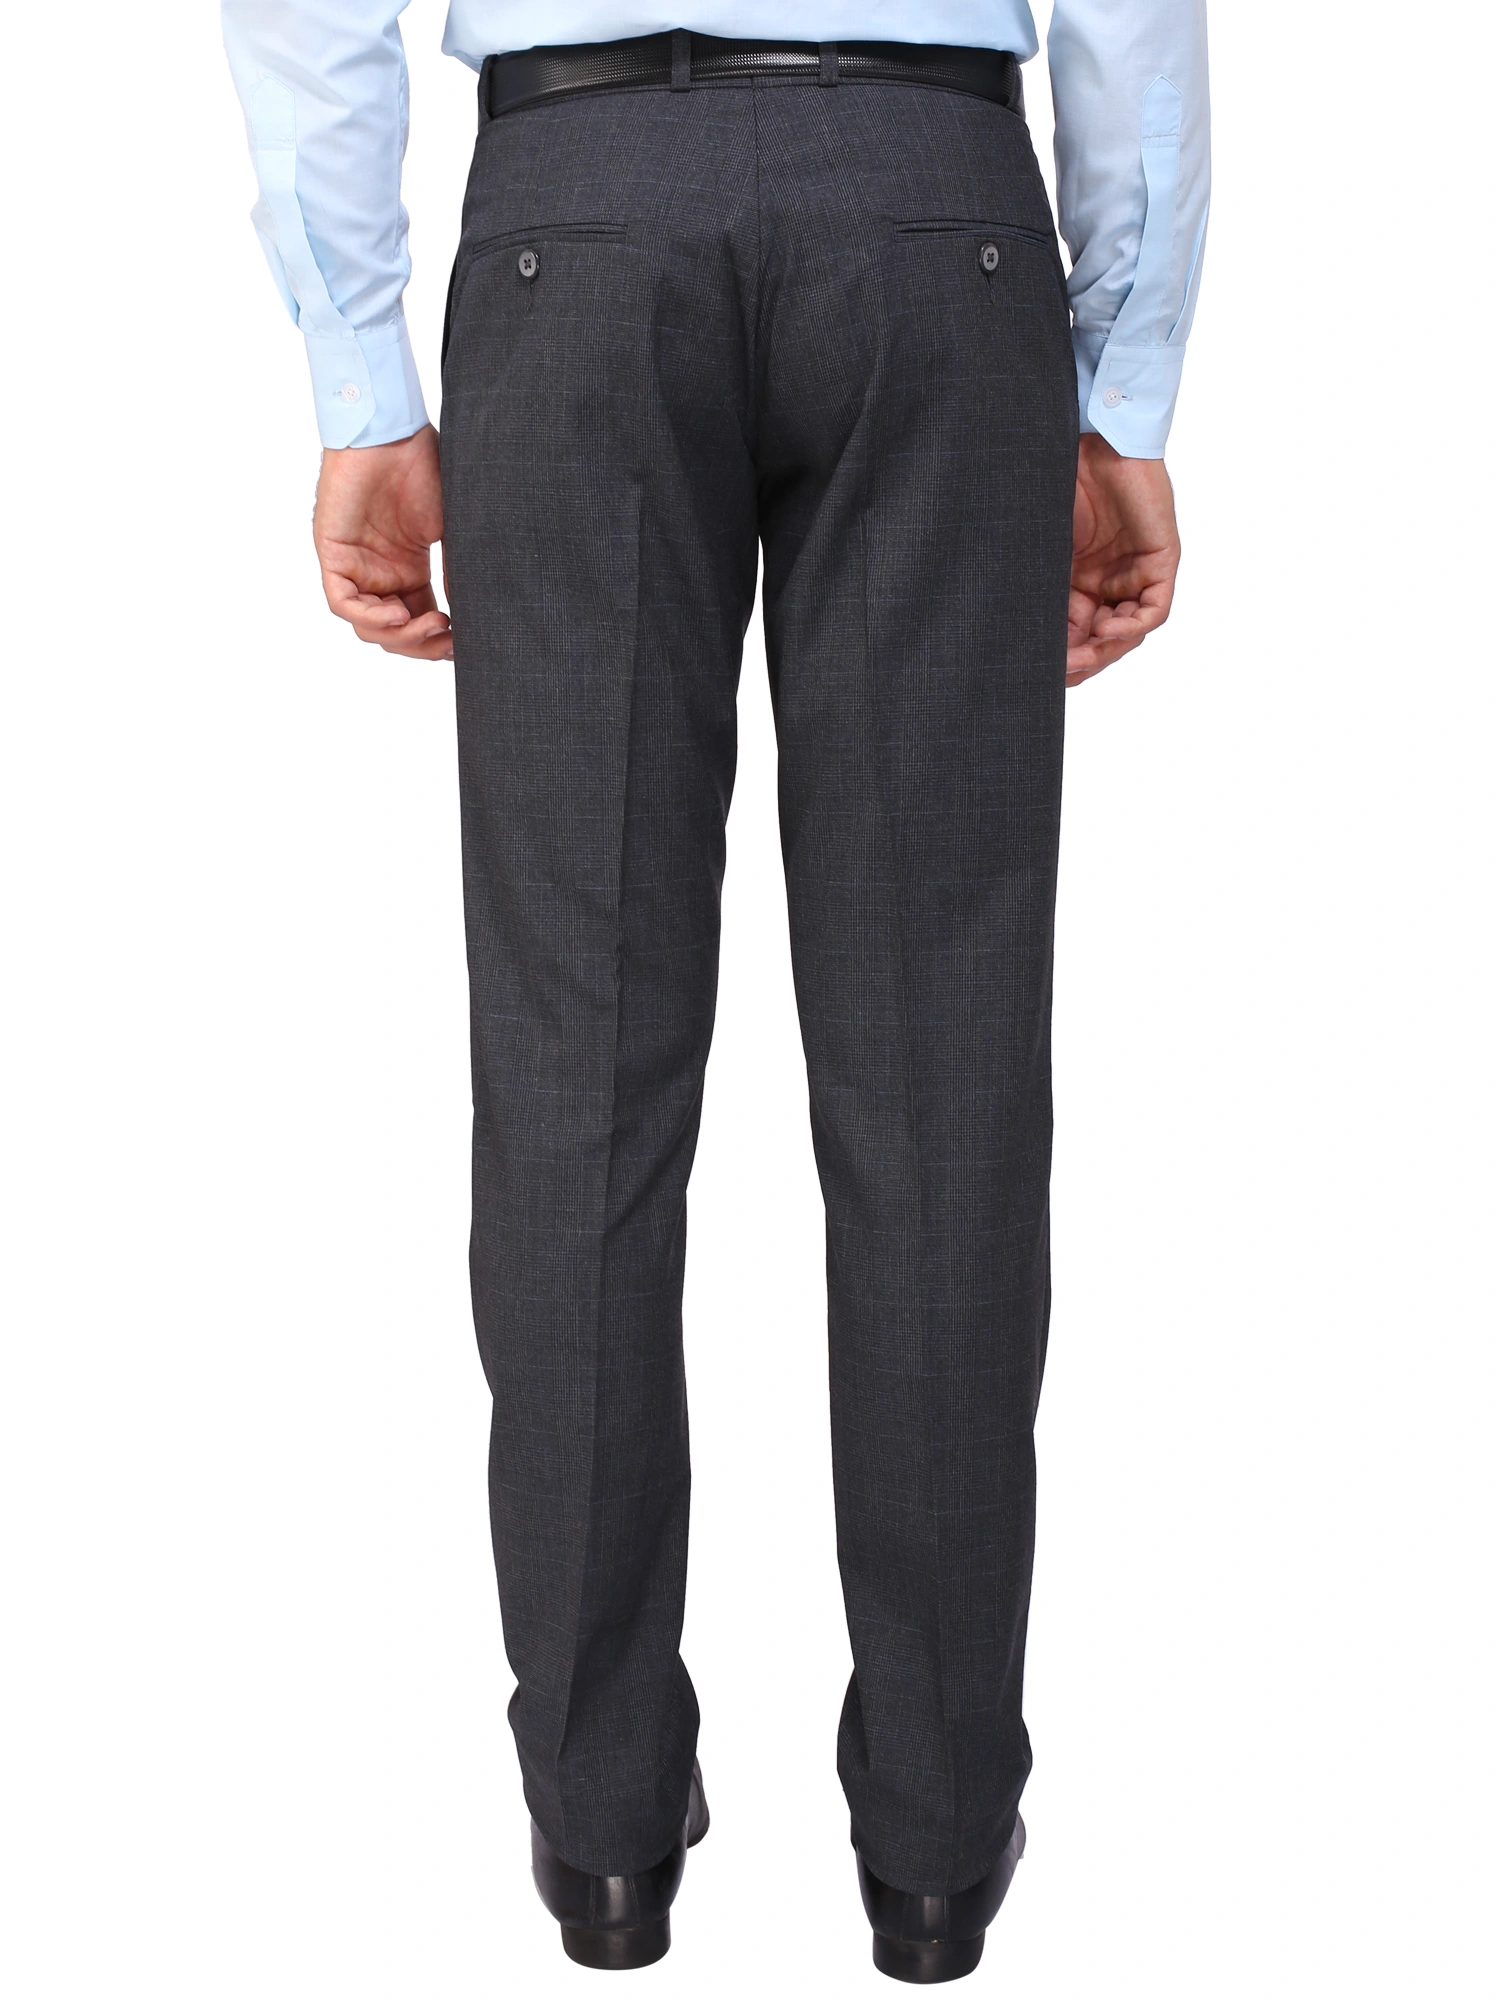 Very Slim Fit Flat Front Stretch Knit Suit Pant | Perry Ellis